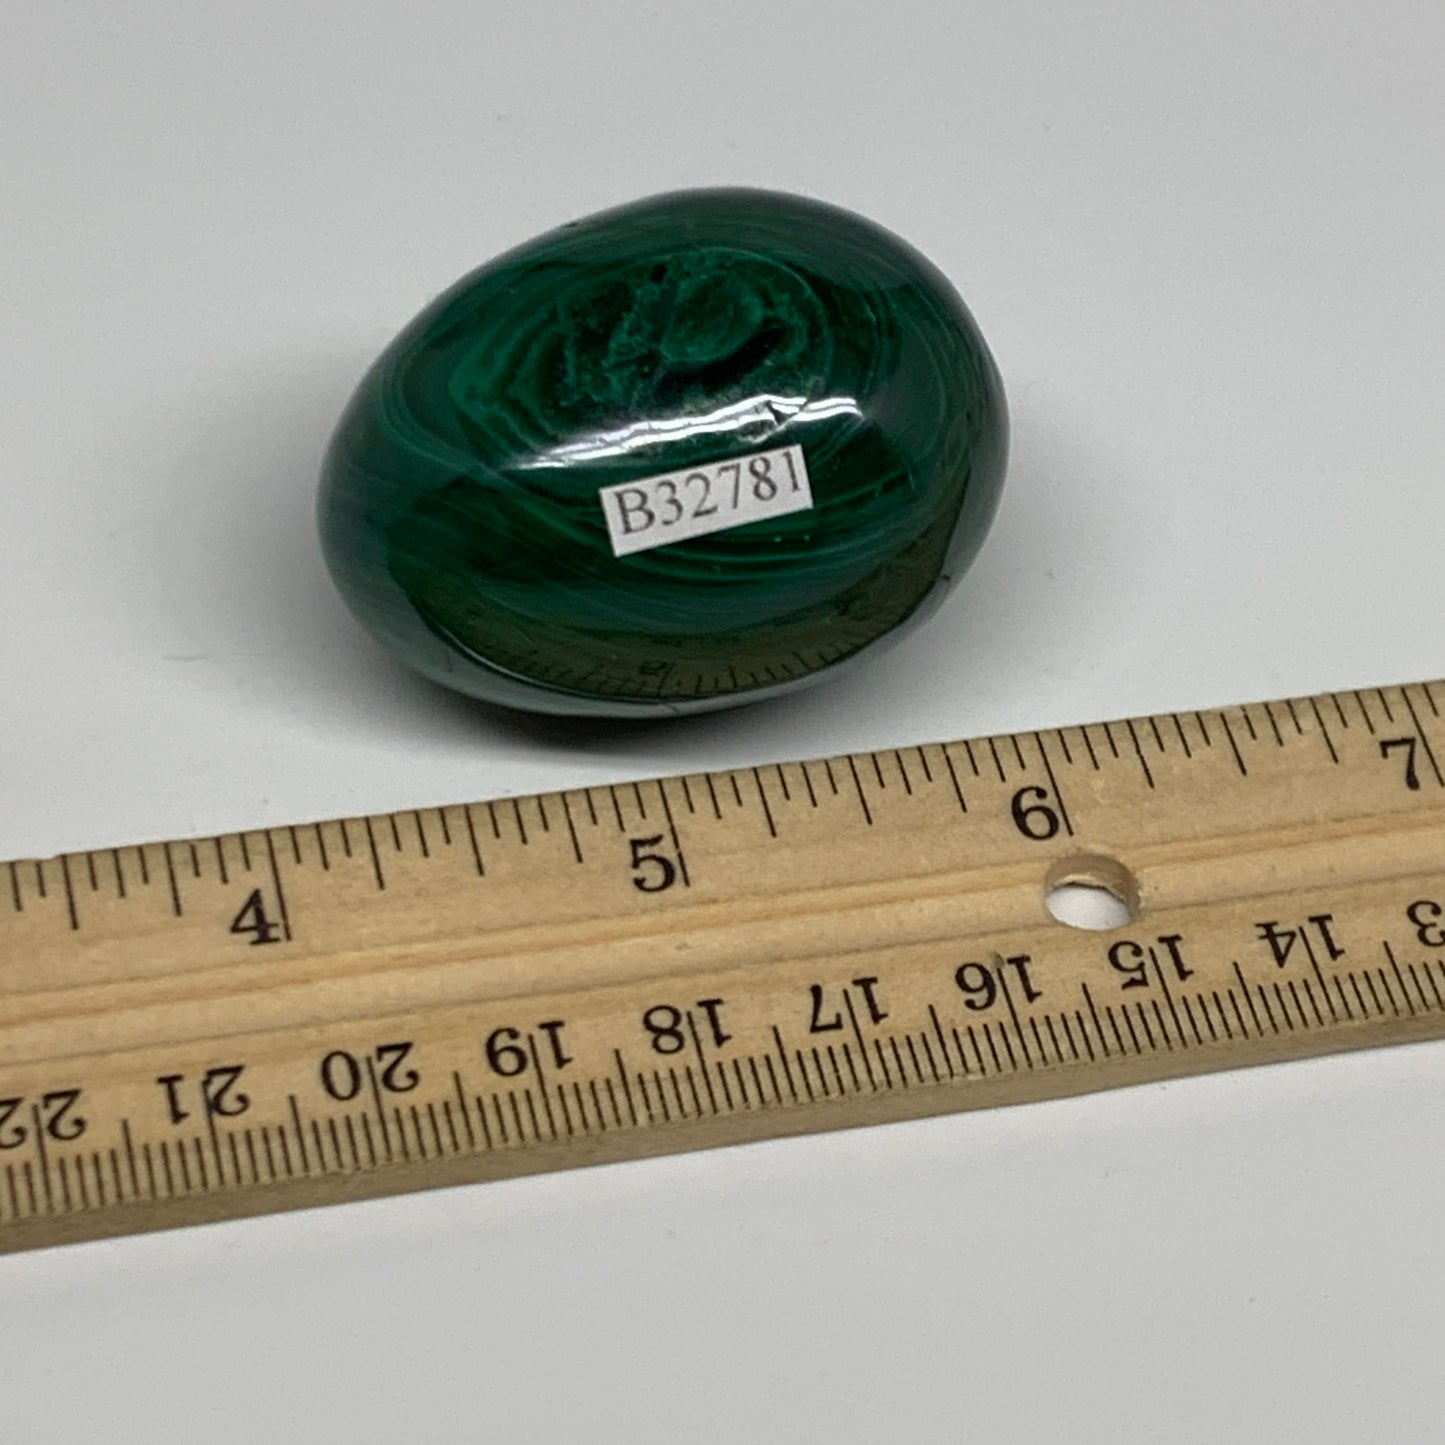 102g, 1.8"x1.3", Natural Solid Malachite Egg Polished Gemstone @Congo, B32781